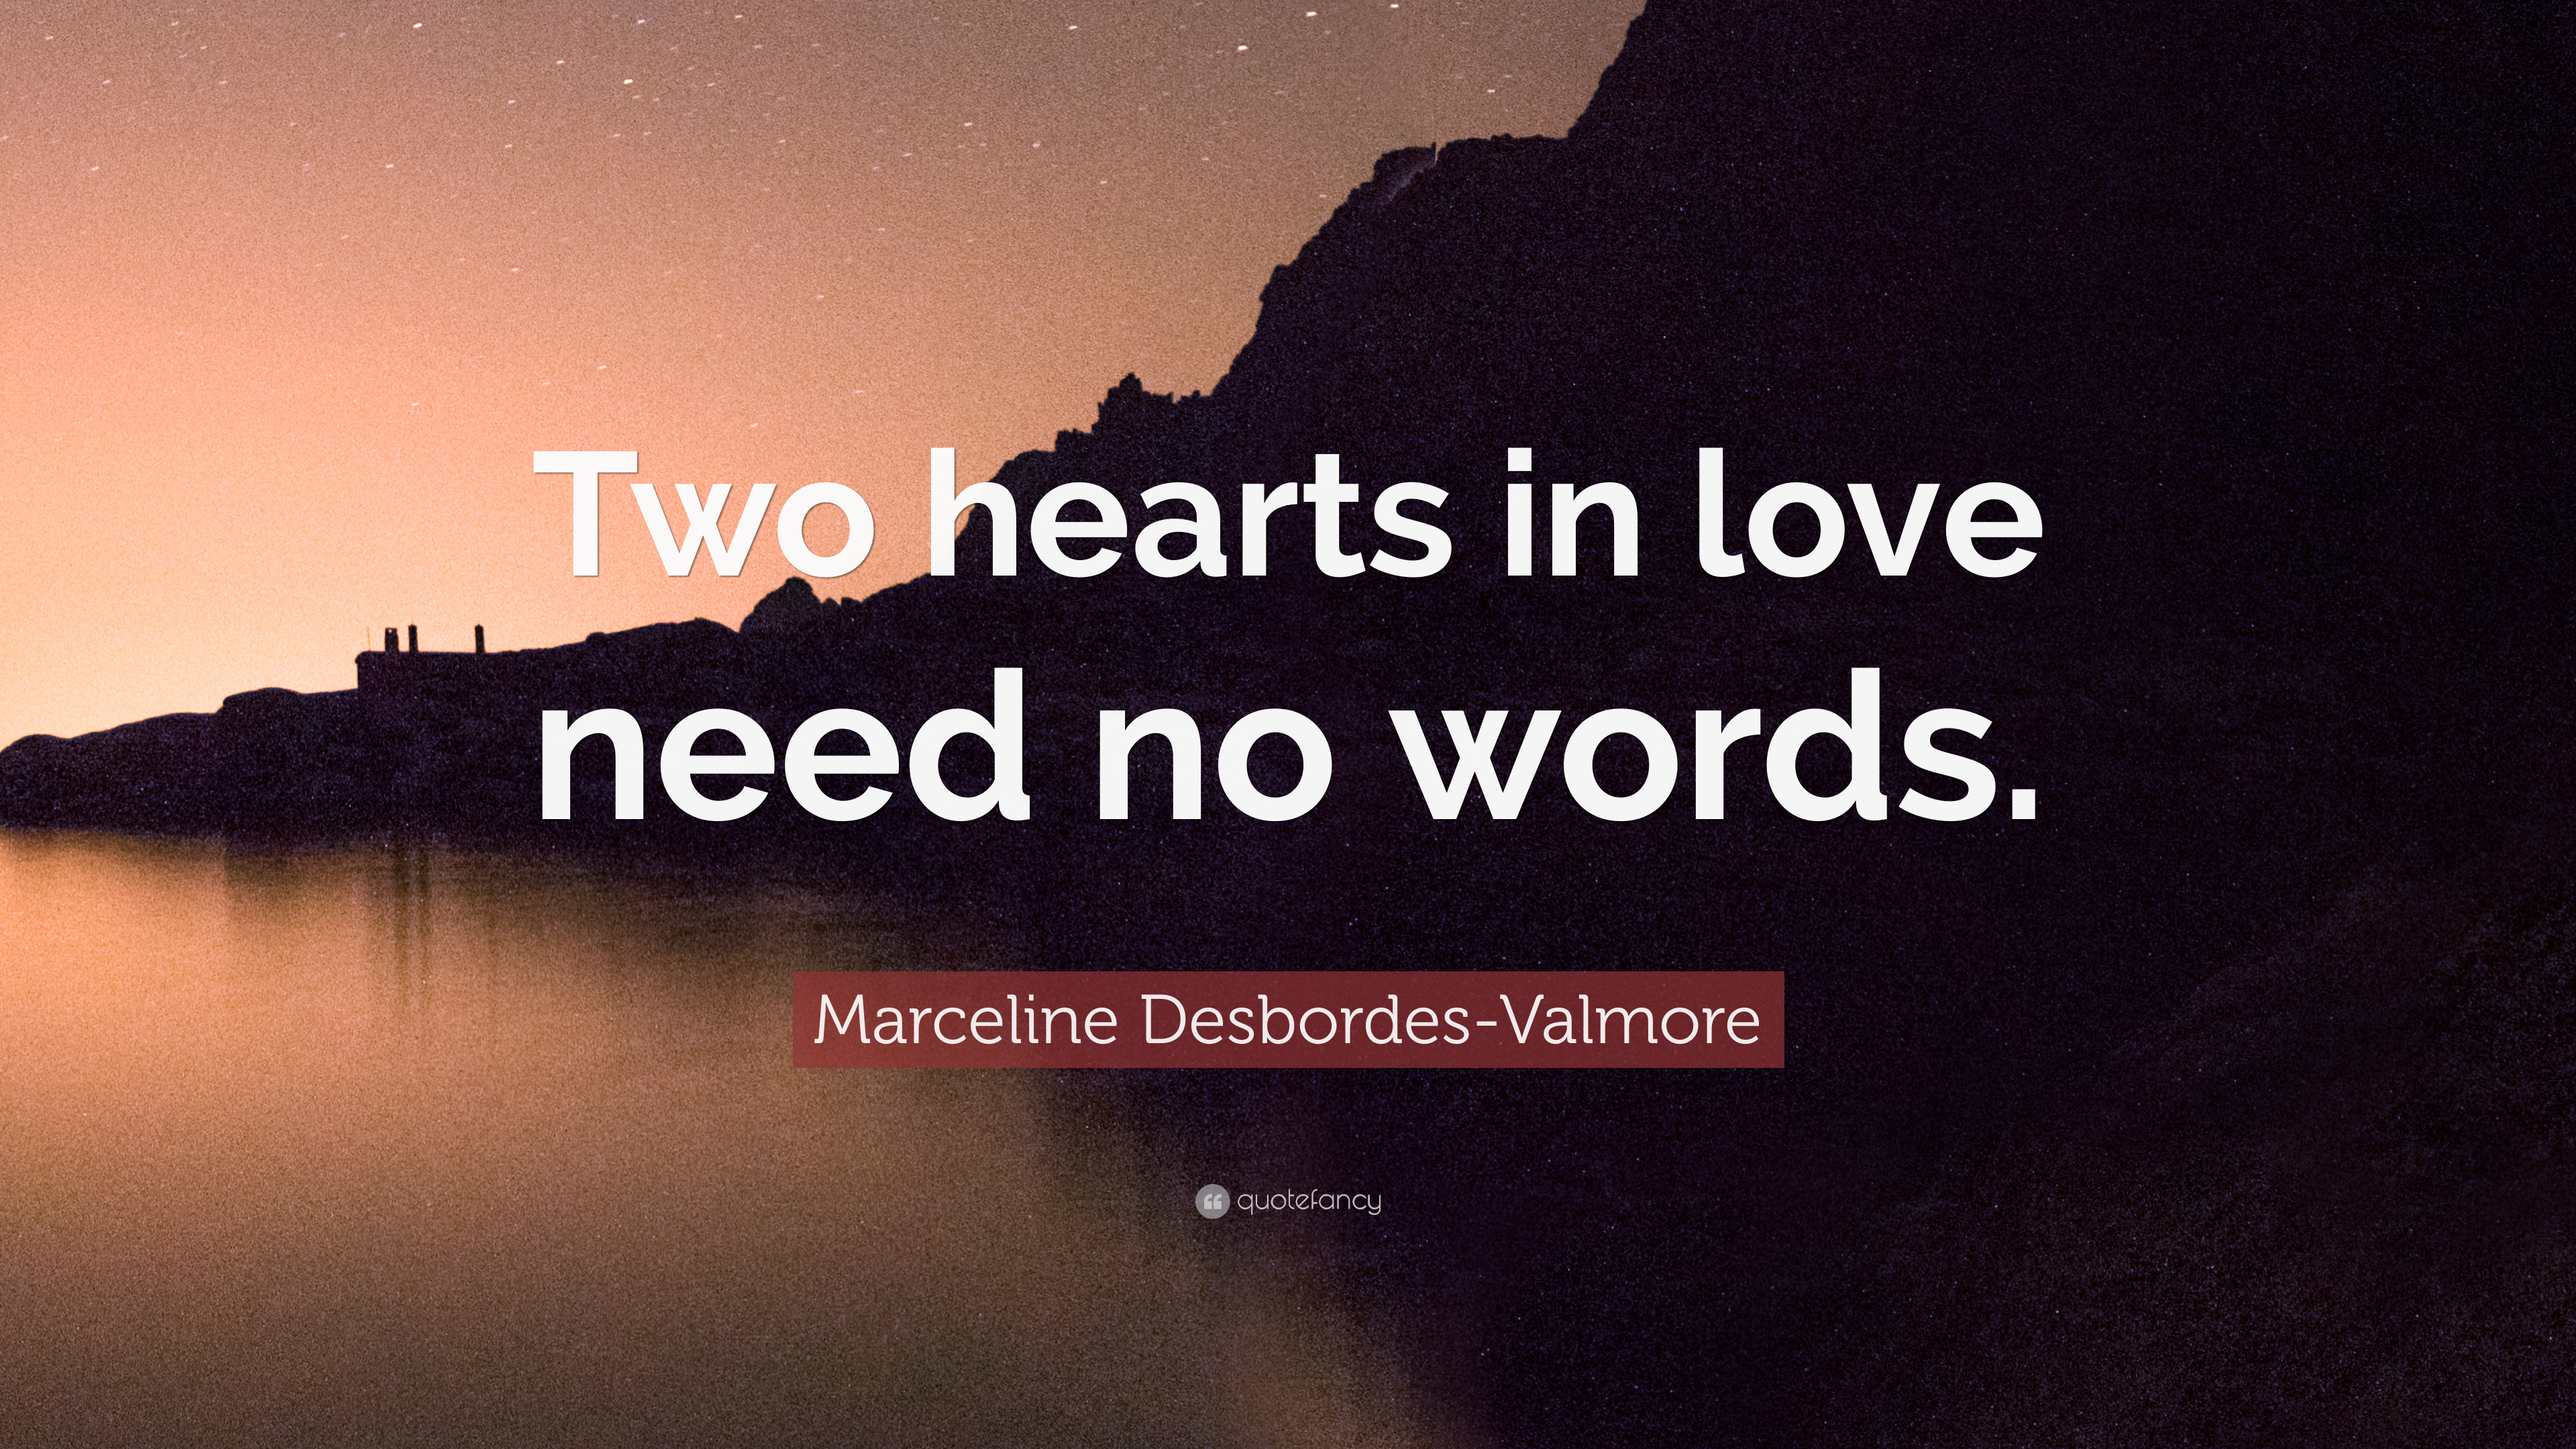 Marceline Desbordes-valmore Quote - Feeling Worthless - HD Wallpaper 